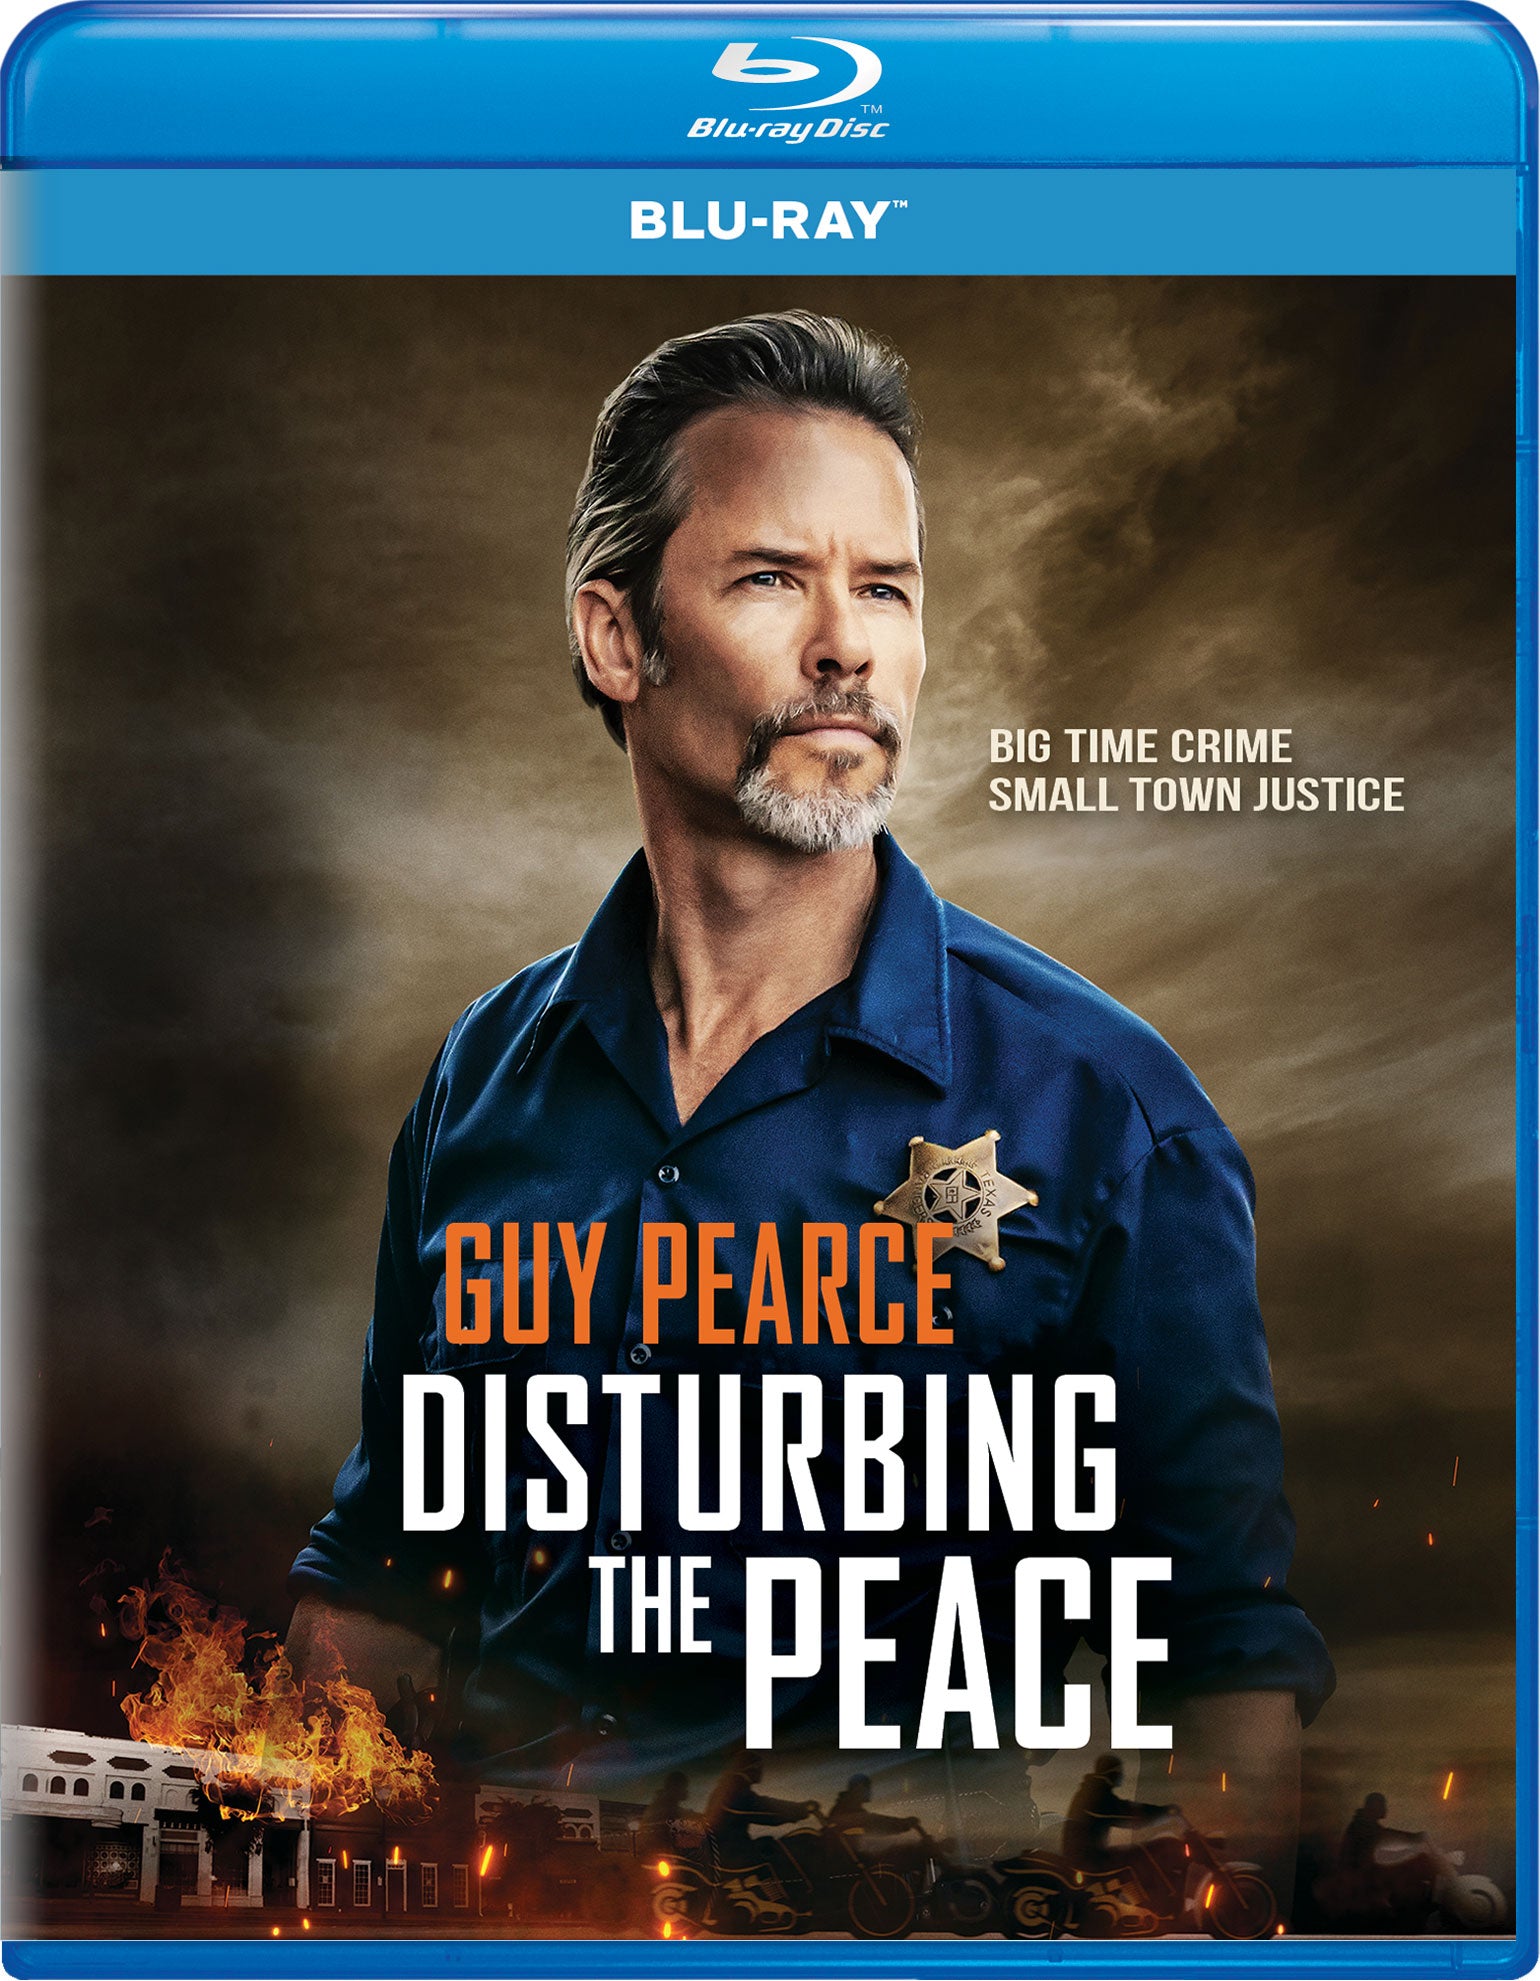 Disturbing the Peace [Blu-ray] cover art